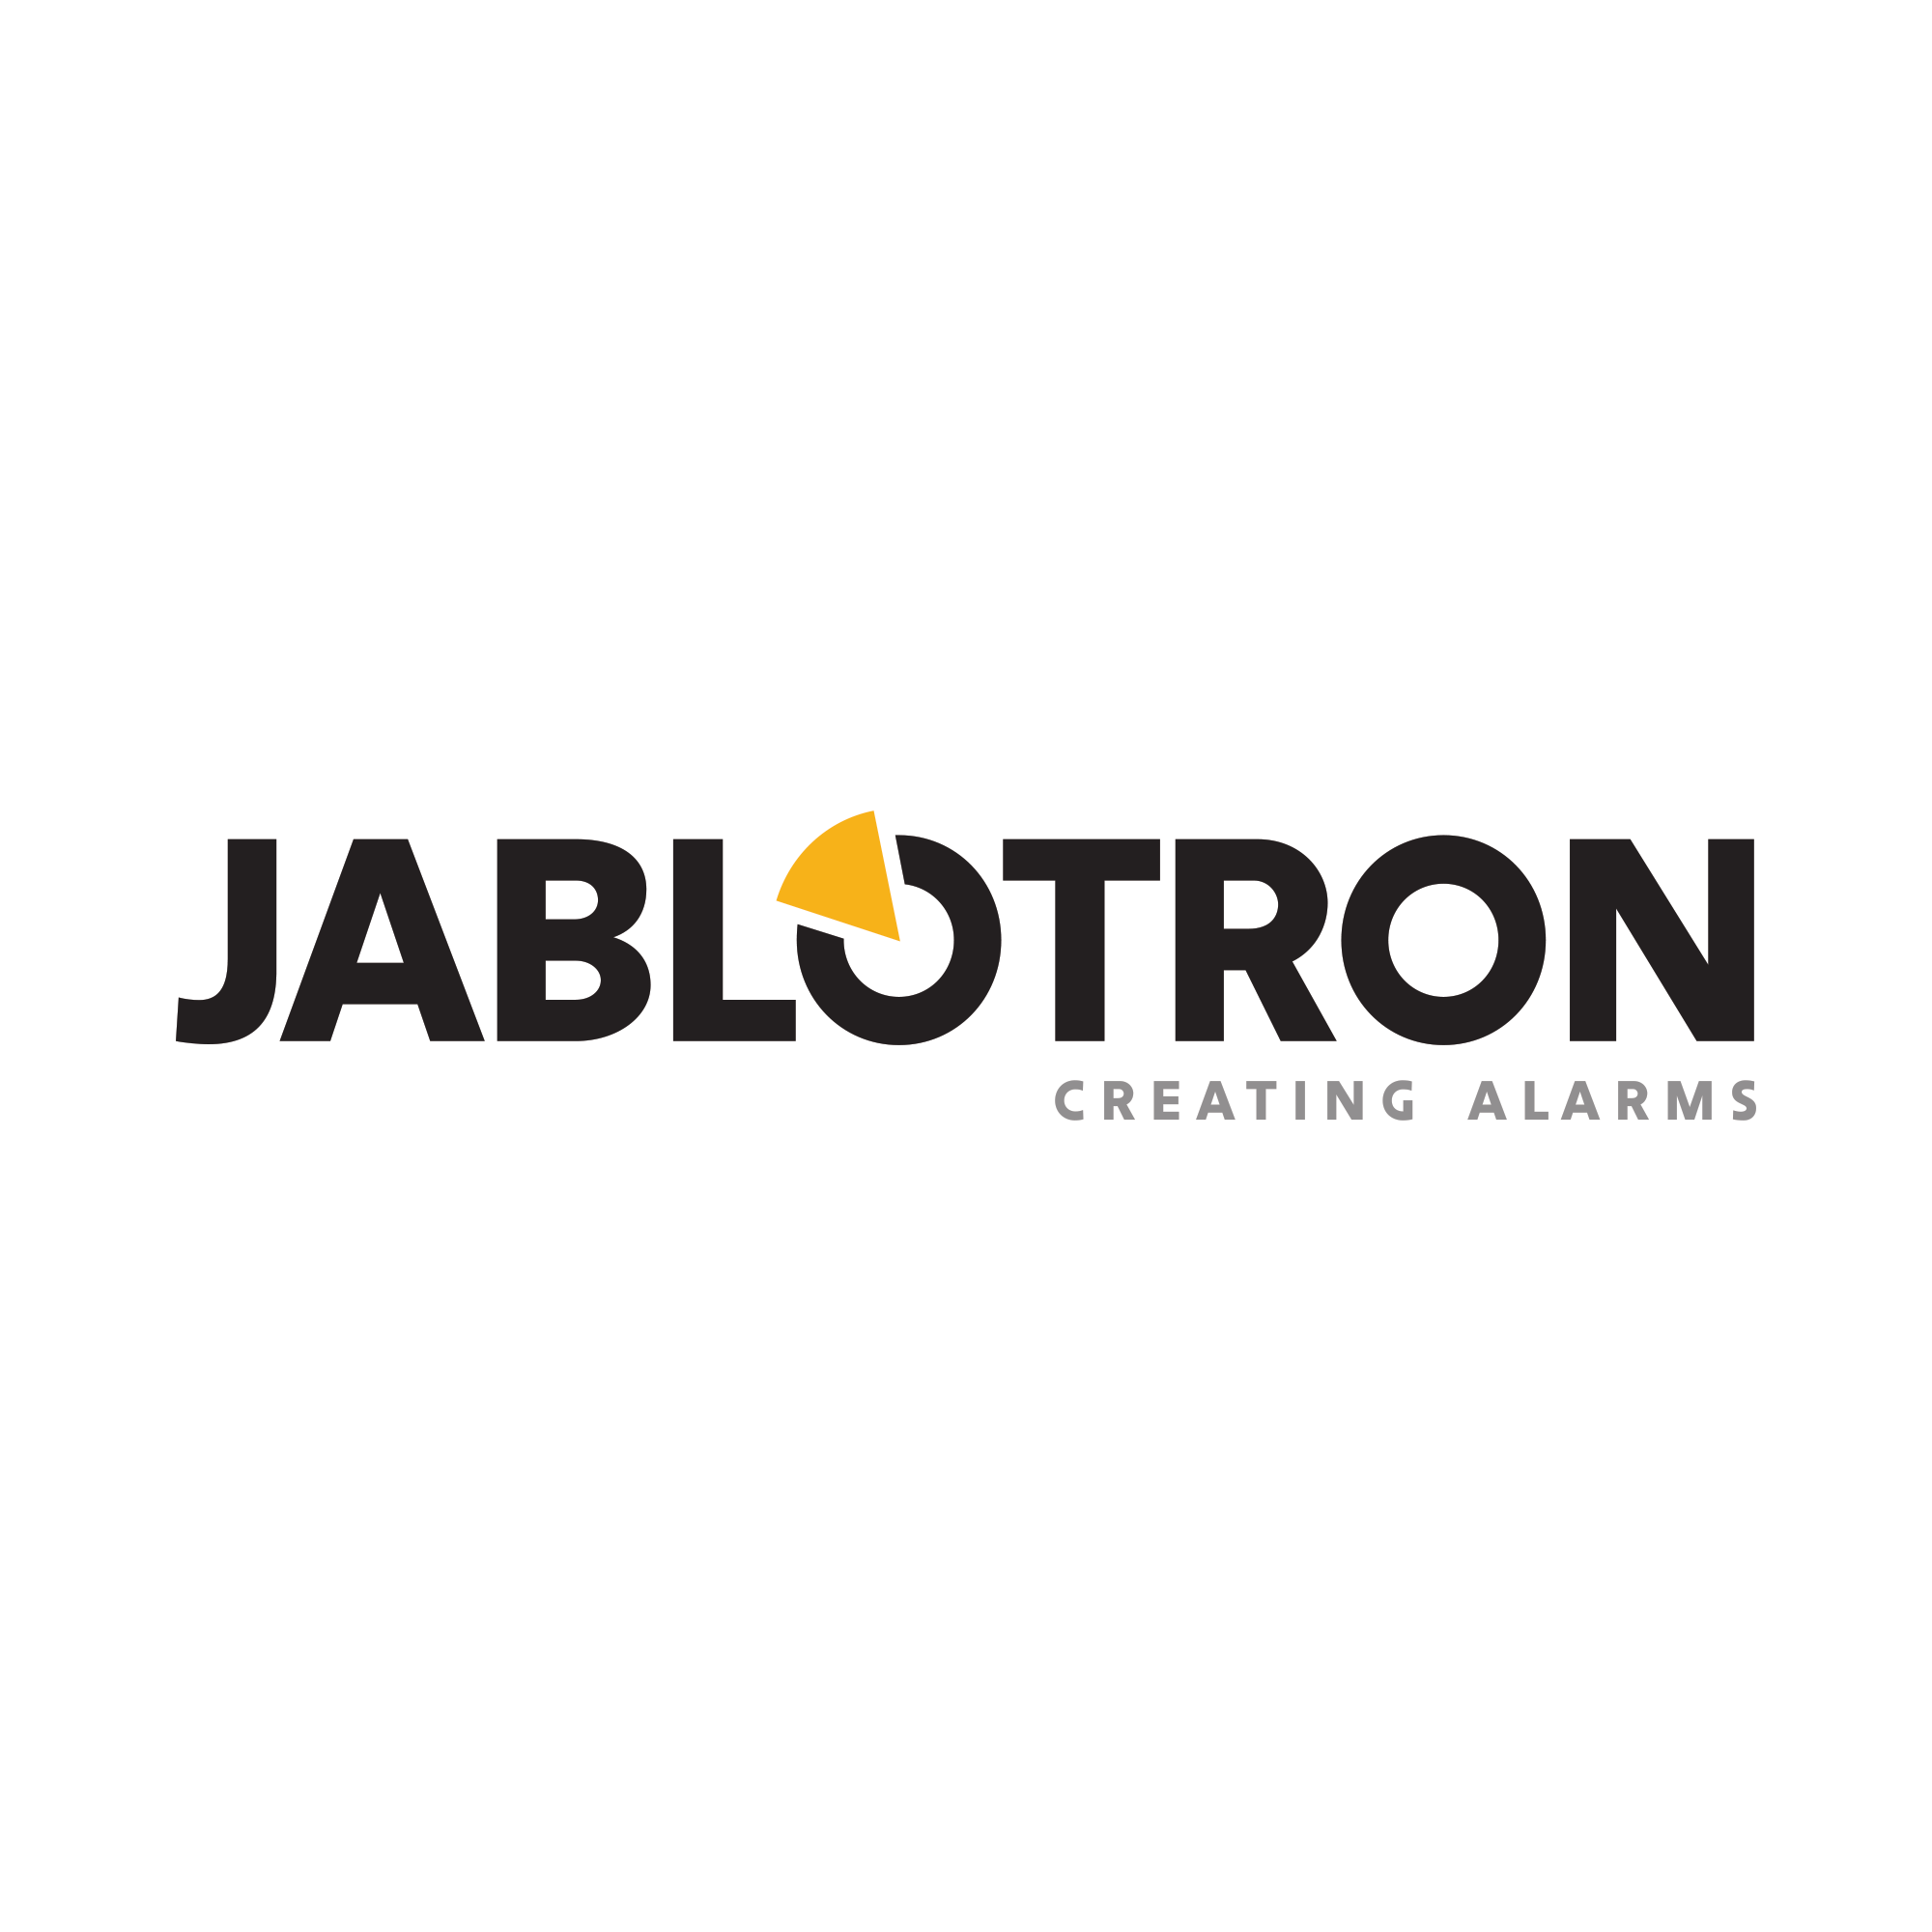 JABLOTRON logo